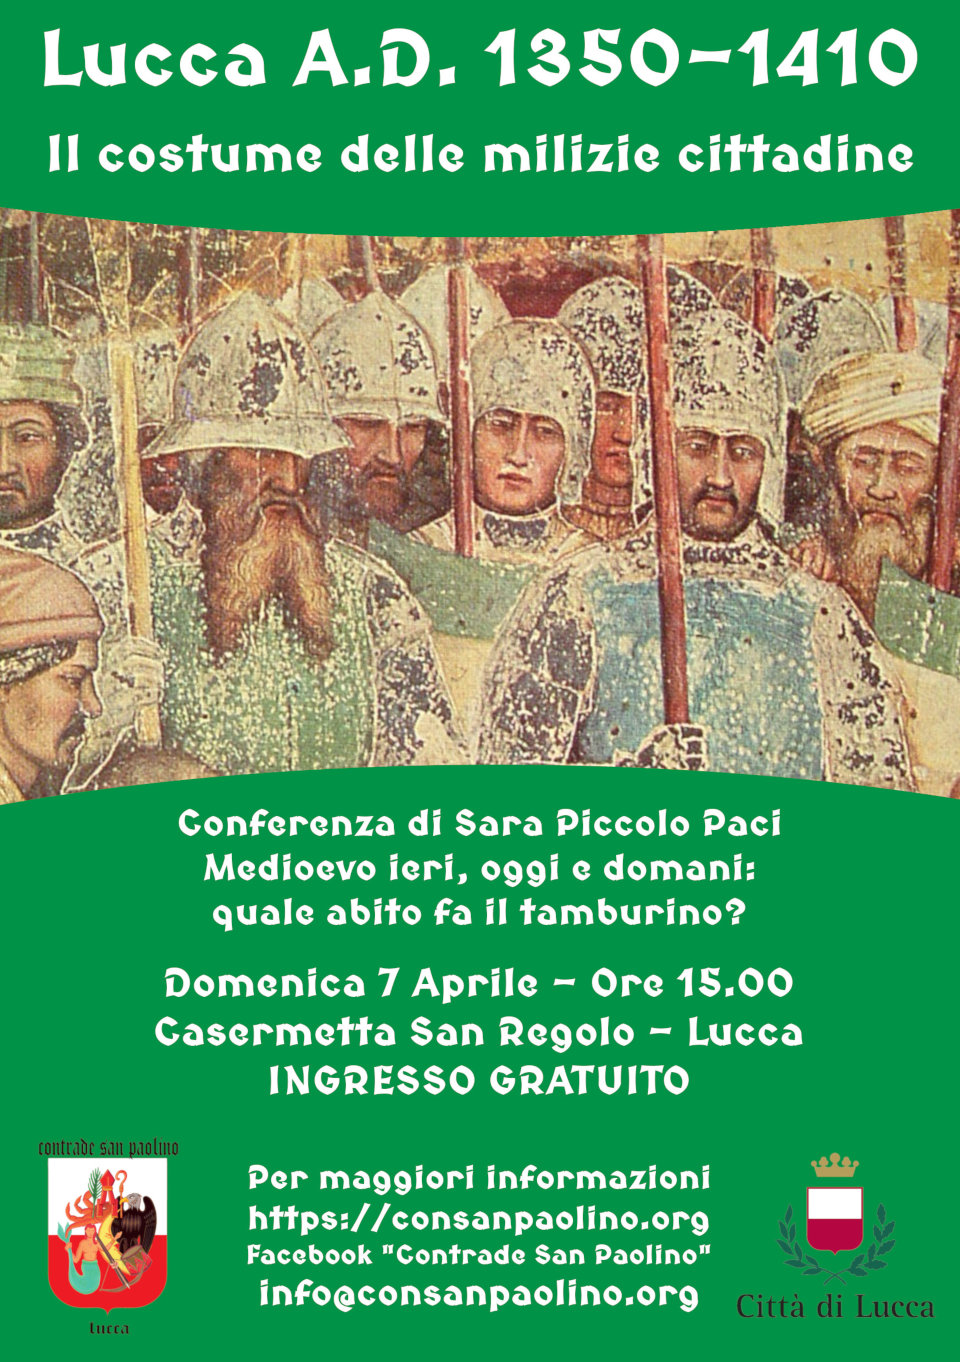 Lucca conferenza Sara Piccolo Paci Contrade San Paolino balestrieri